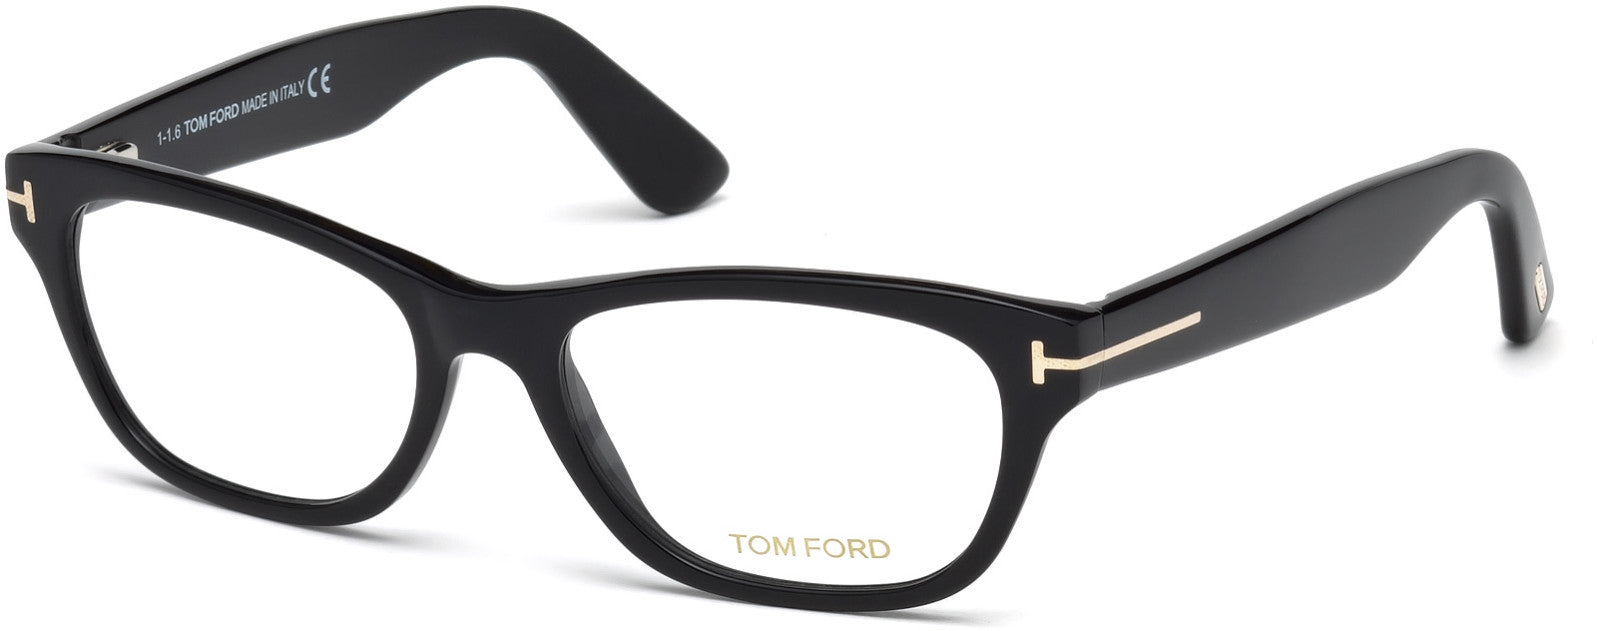 Tom Ford FT5425 Geometric Eyeglasses 001-001 - Shiny Black